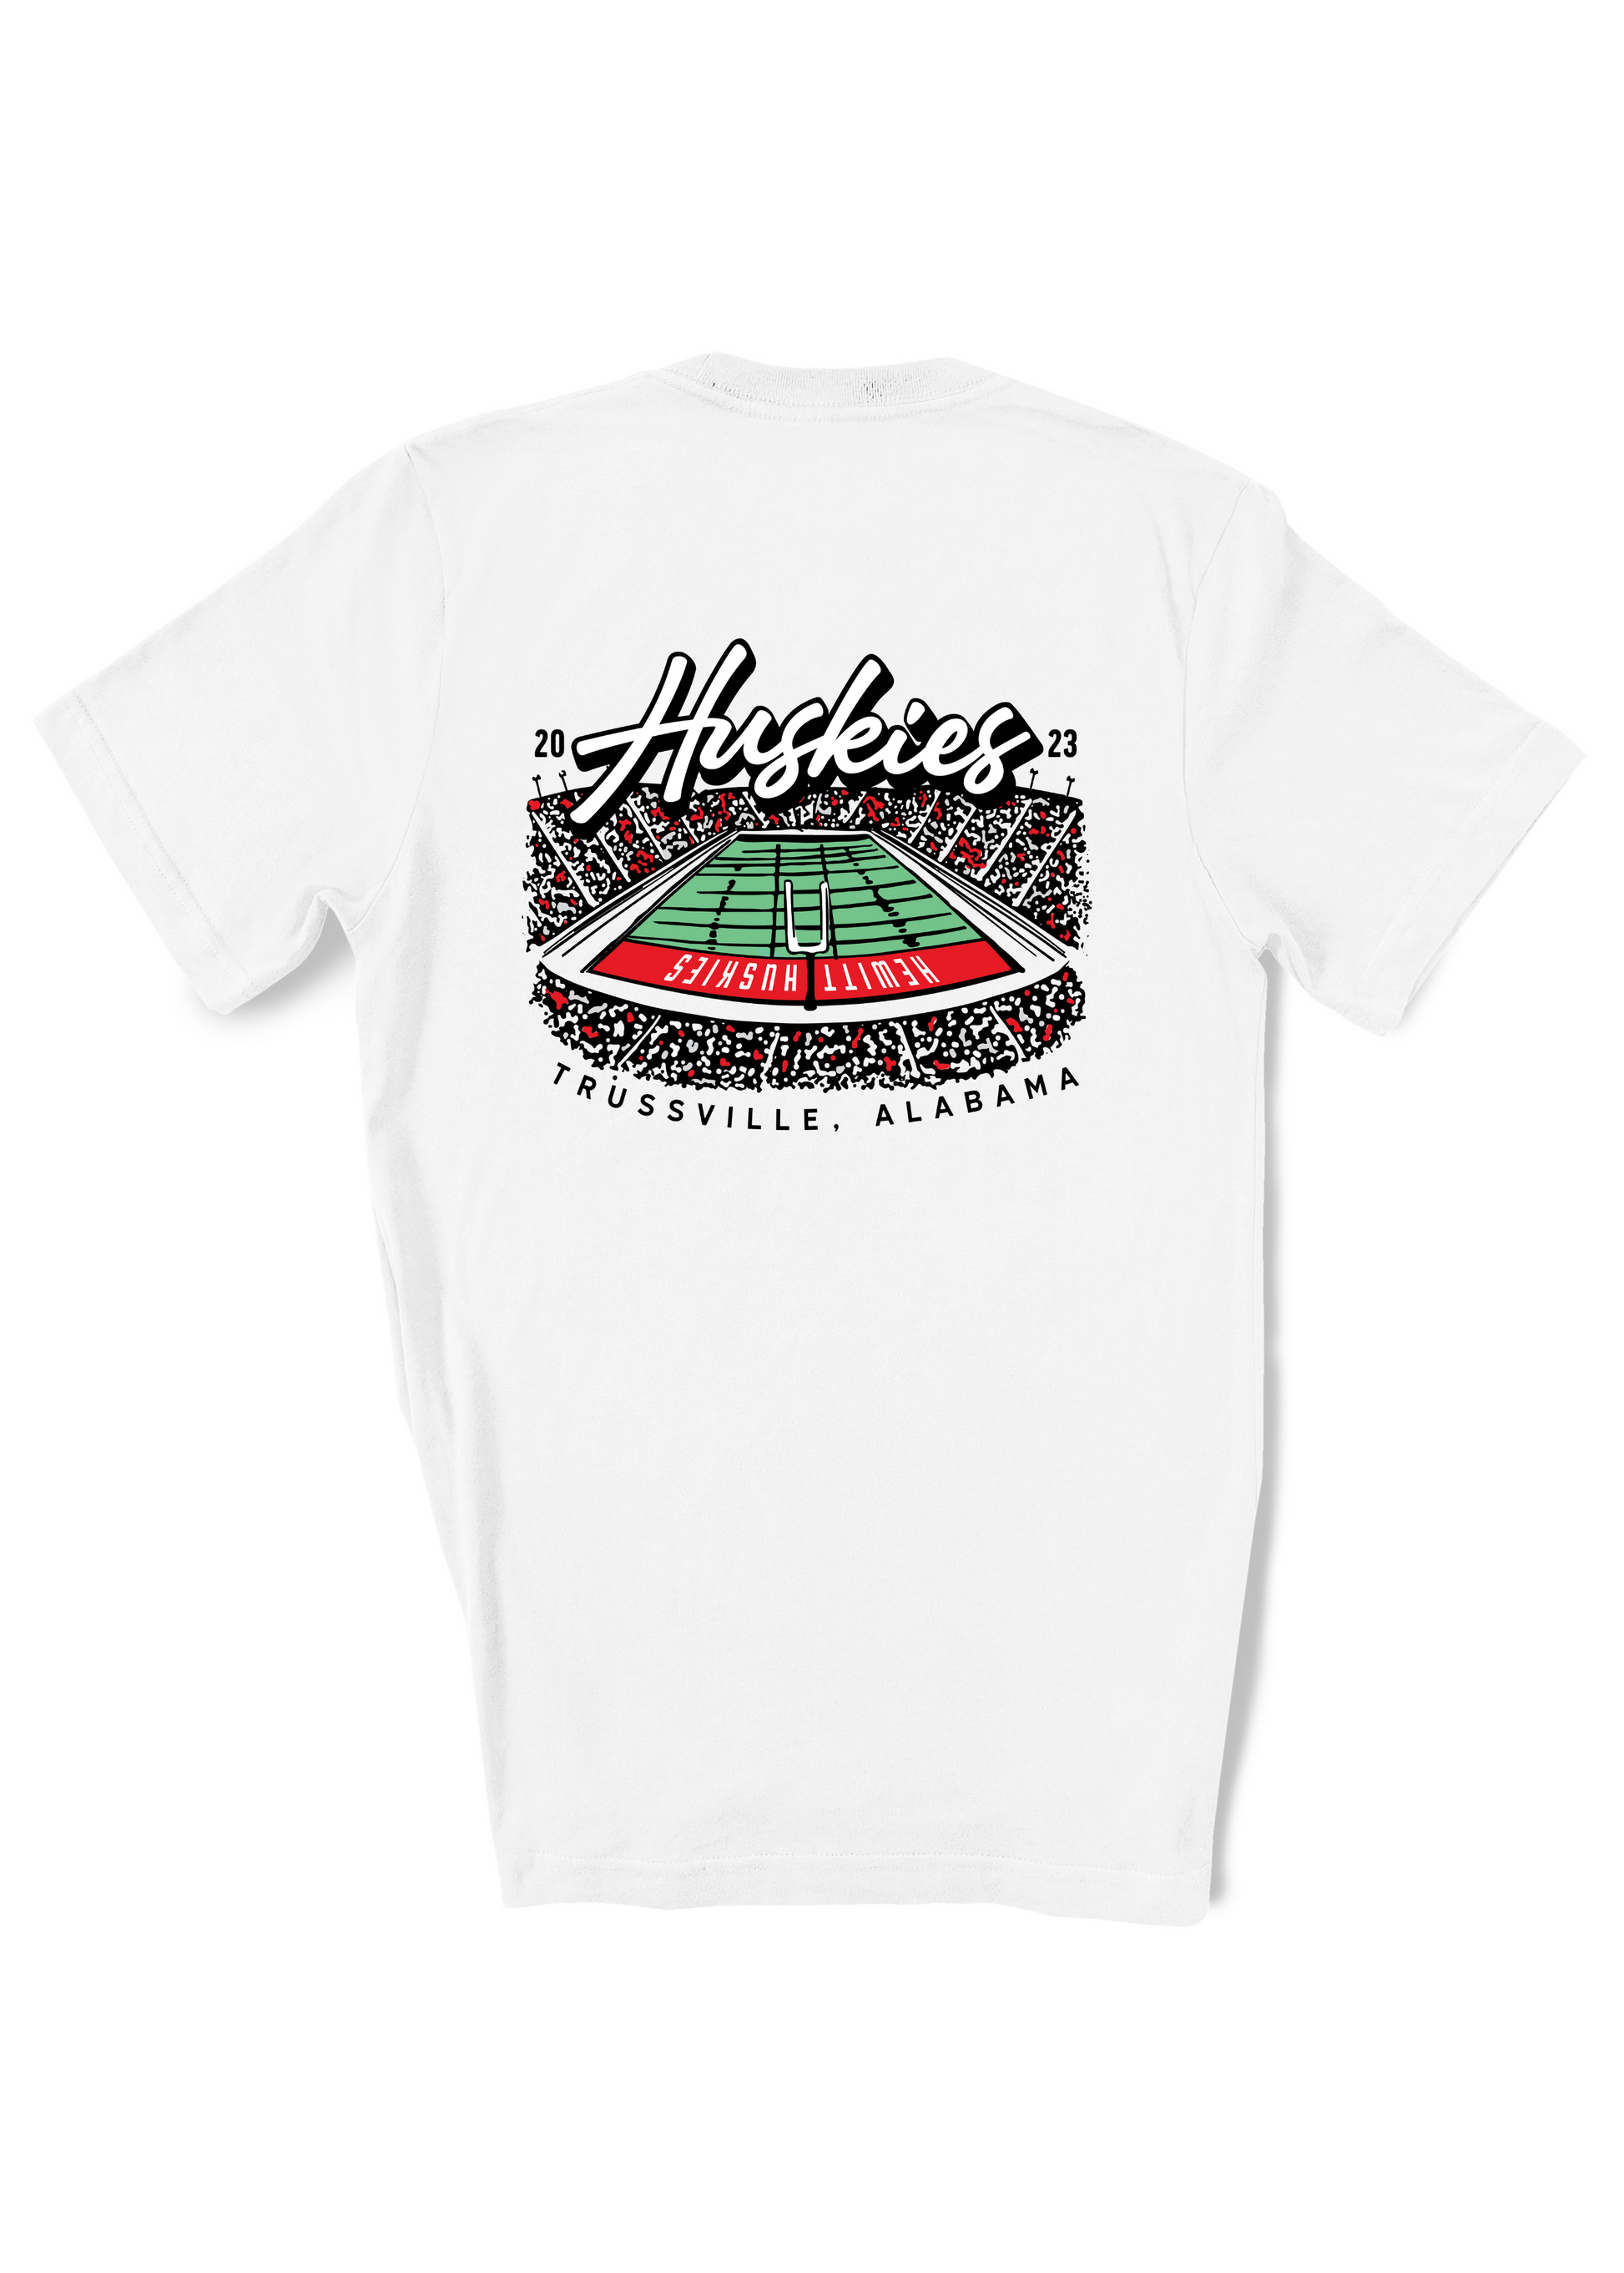 Huskies Stadium | Kids Tee-Adult Tee-Sister Shirts-Sister Shirts, Cute & Custom Tees for Mama & Littles in Trussville, Alabama.